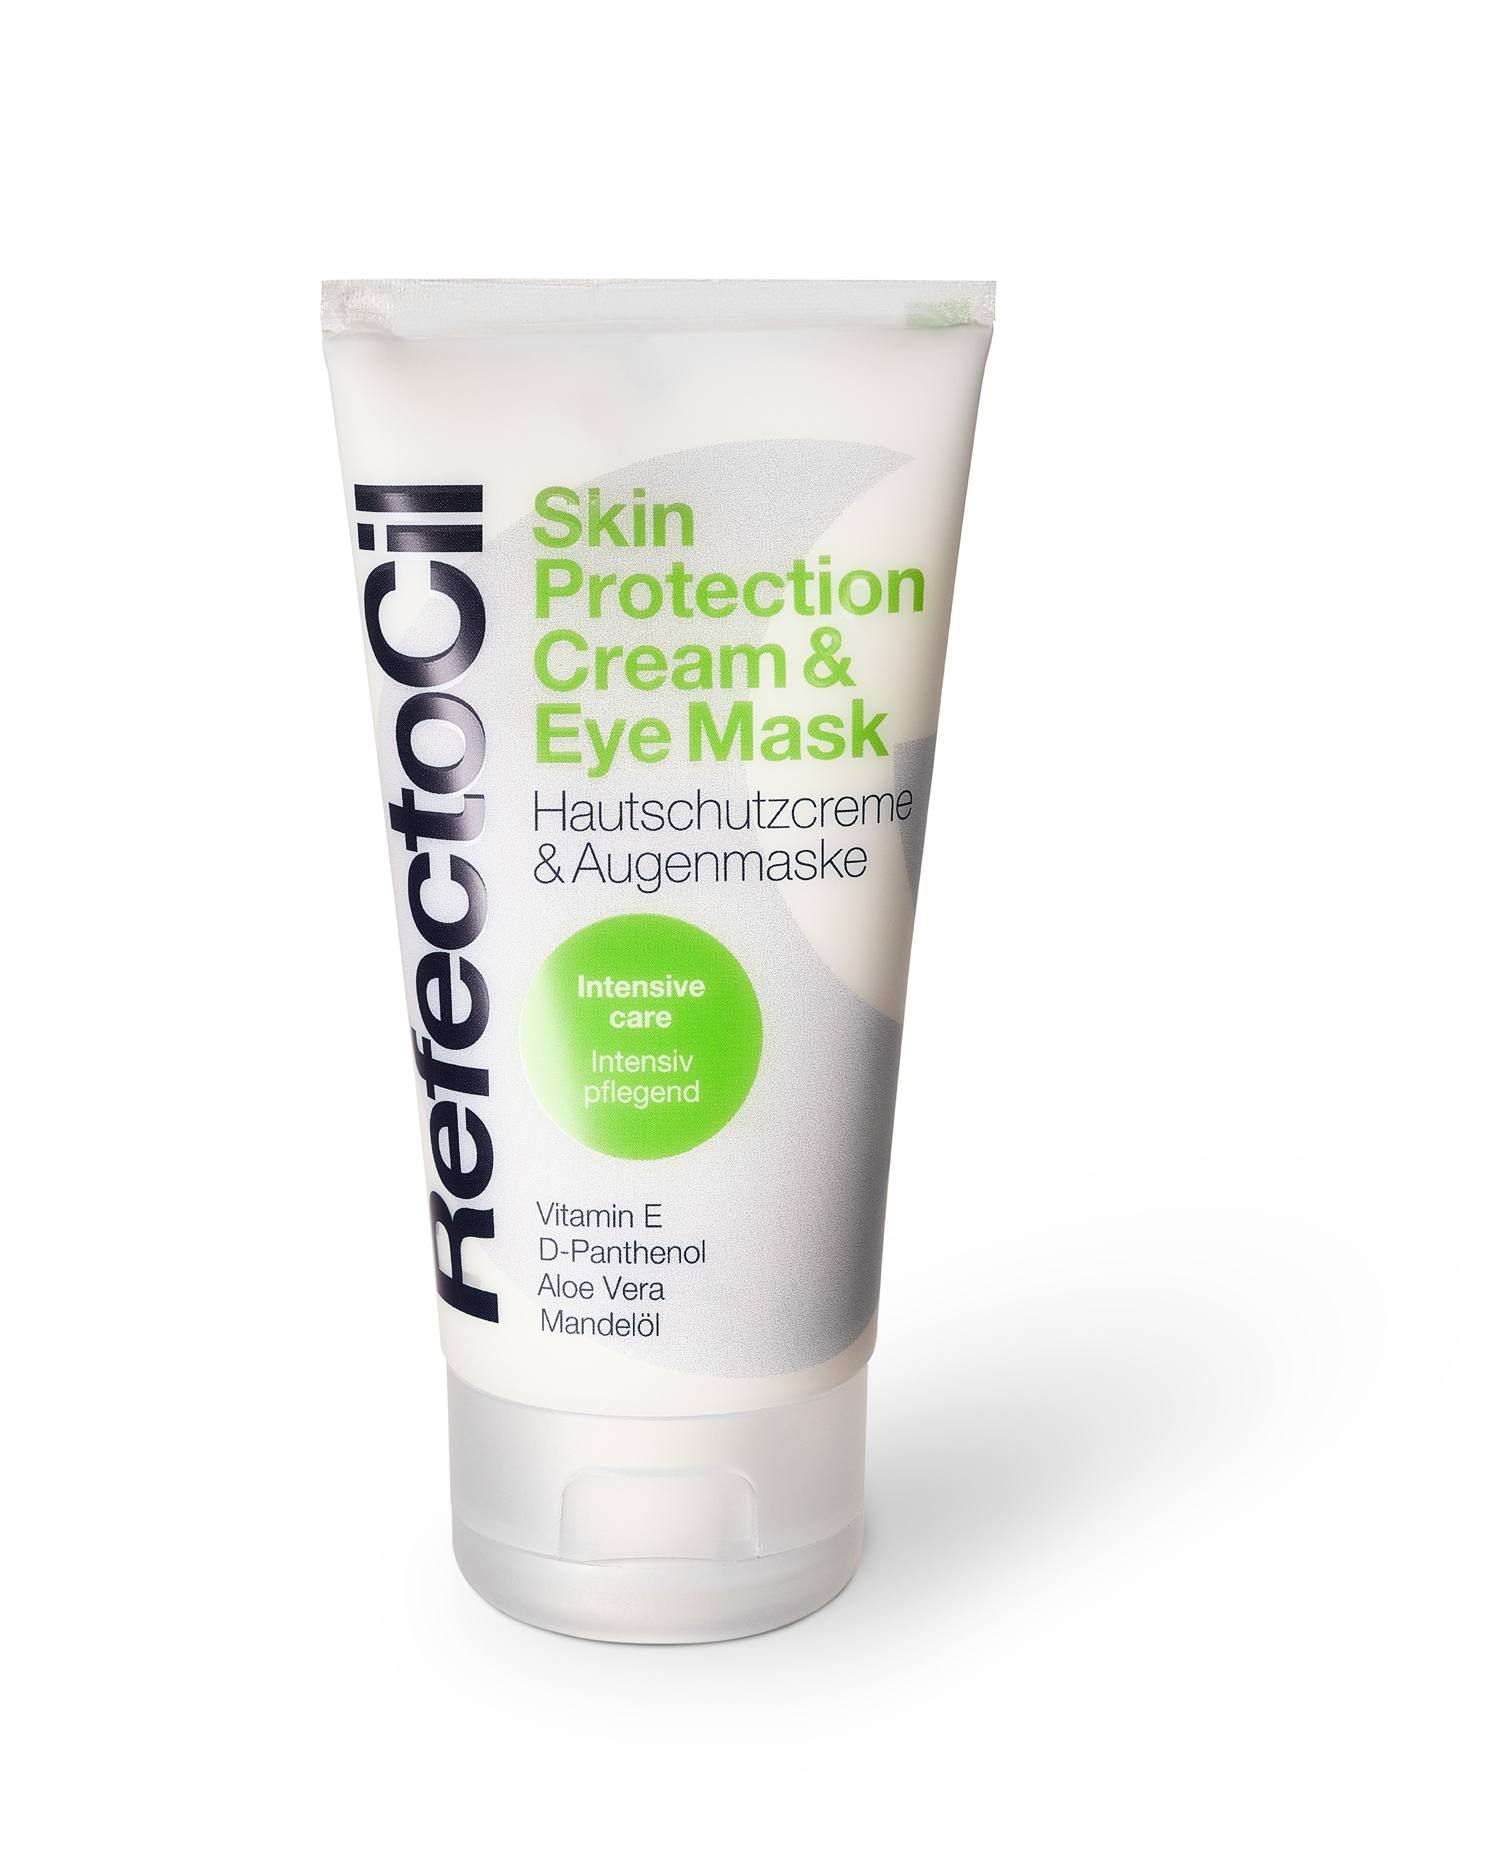 RefectoCil Skin Protection Cream, 75 ml